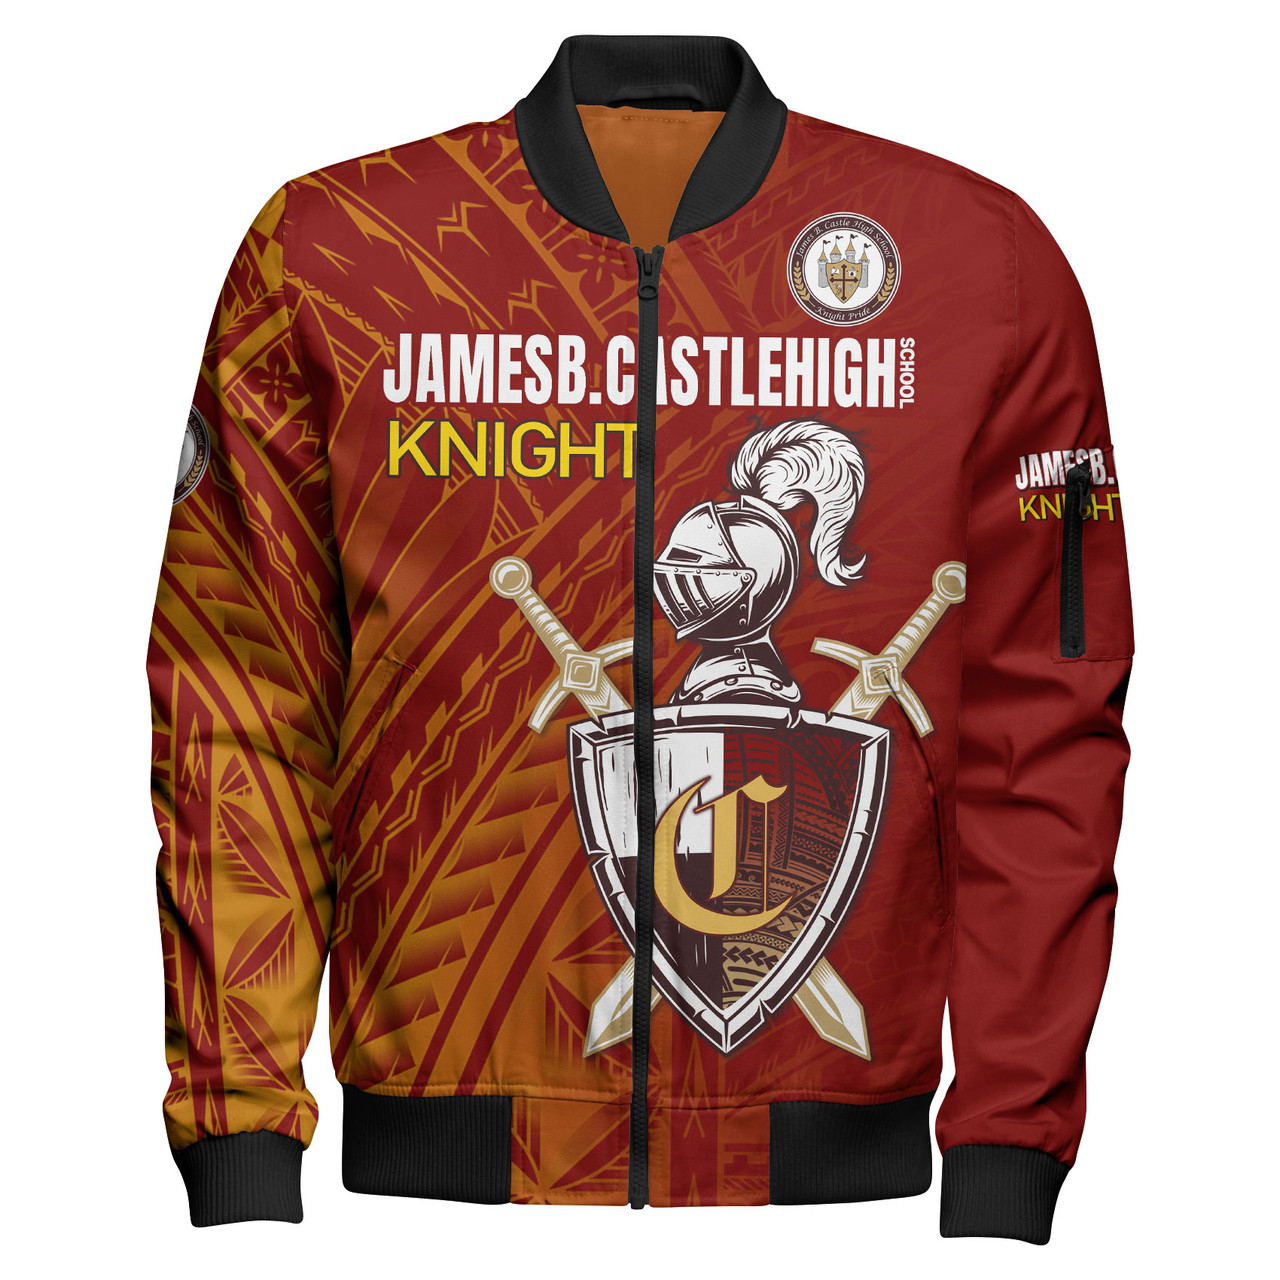 Hawaii James B. Castle High School Bomber Jacket - Knights With Shield Hawaii Patterns